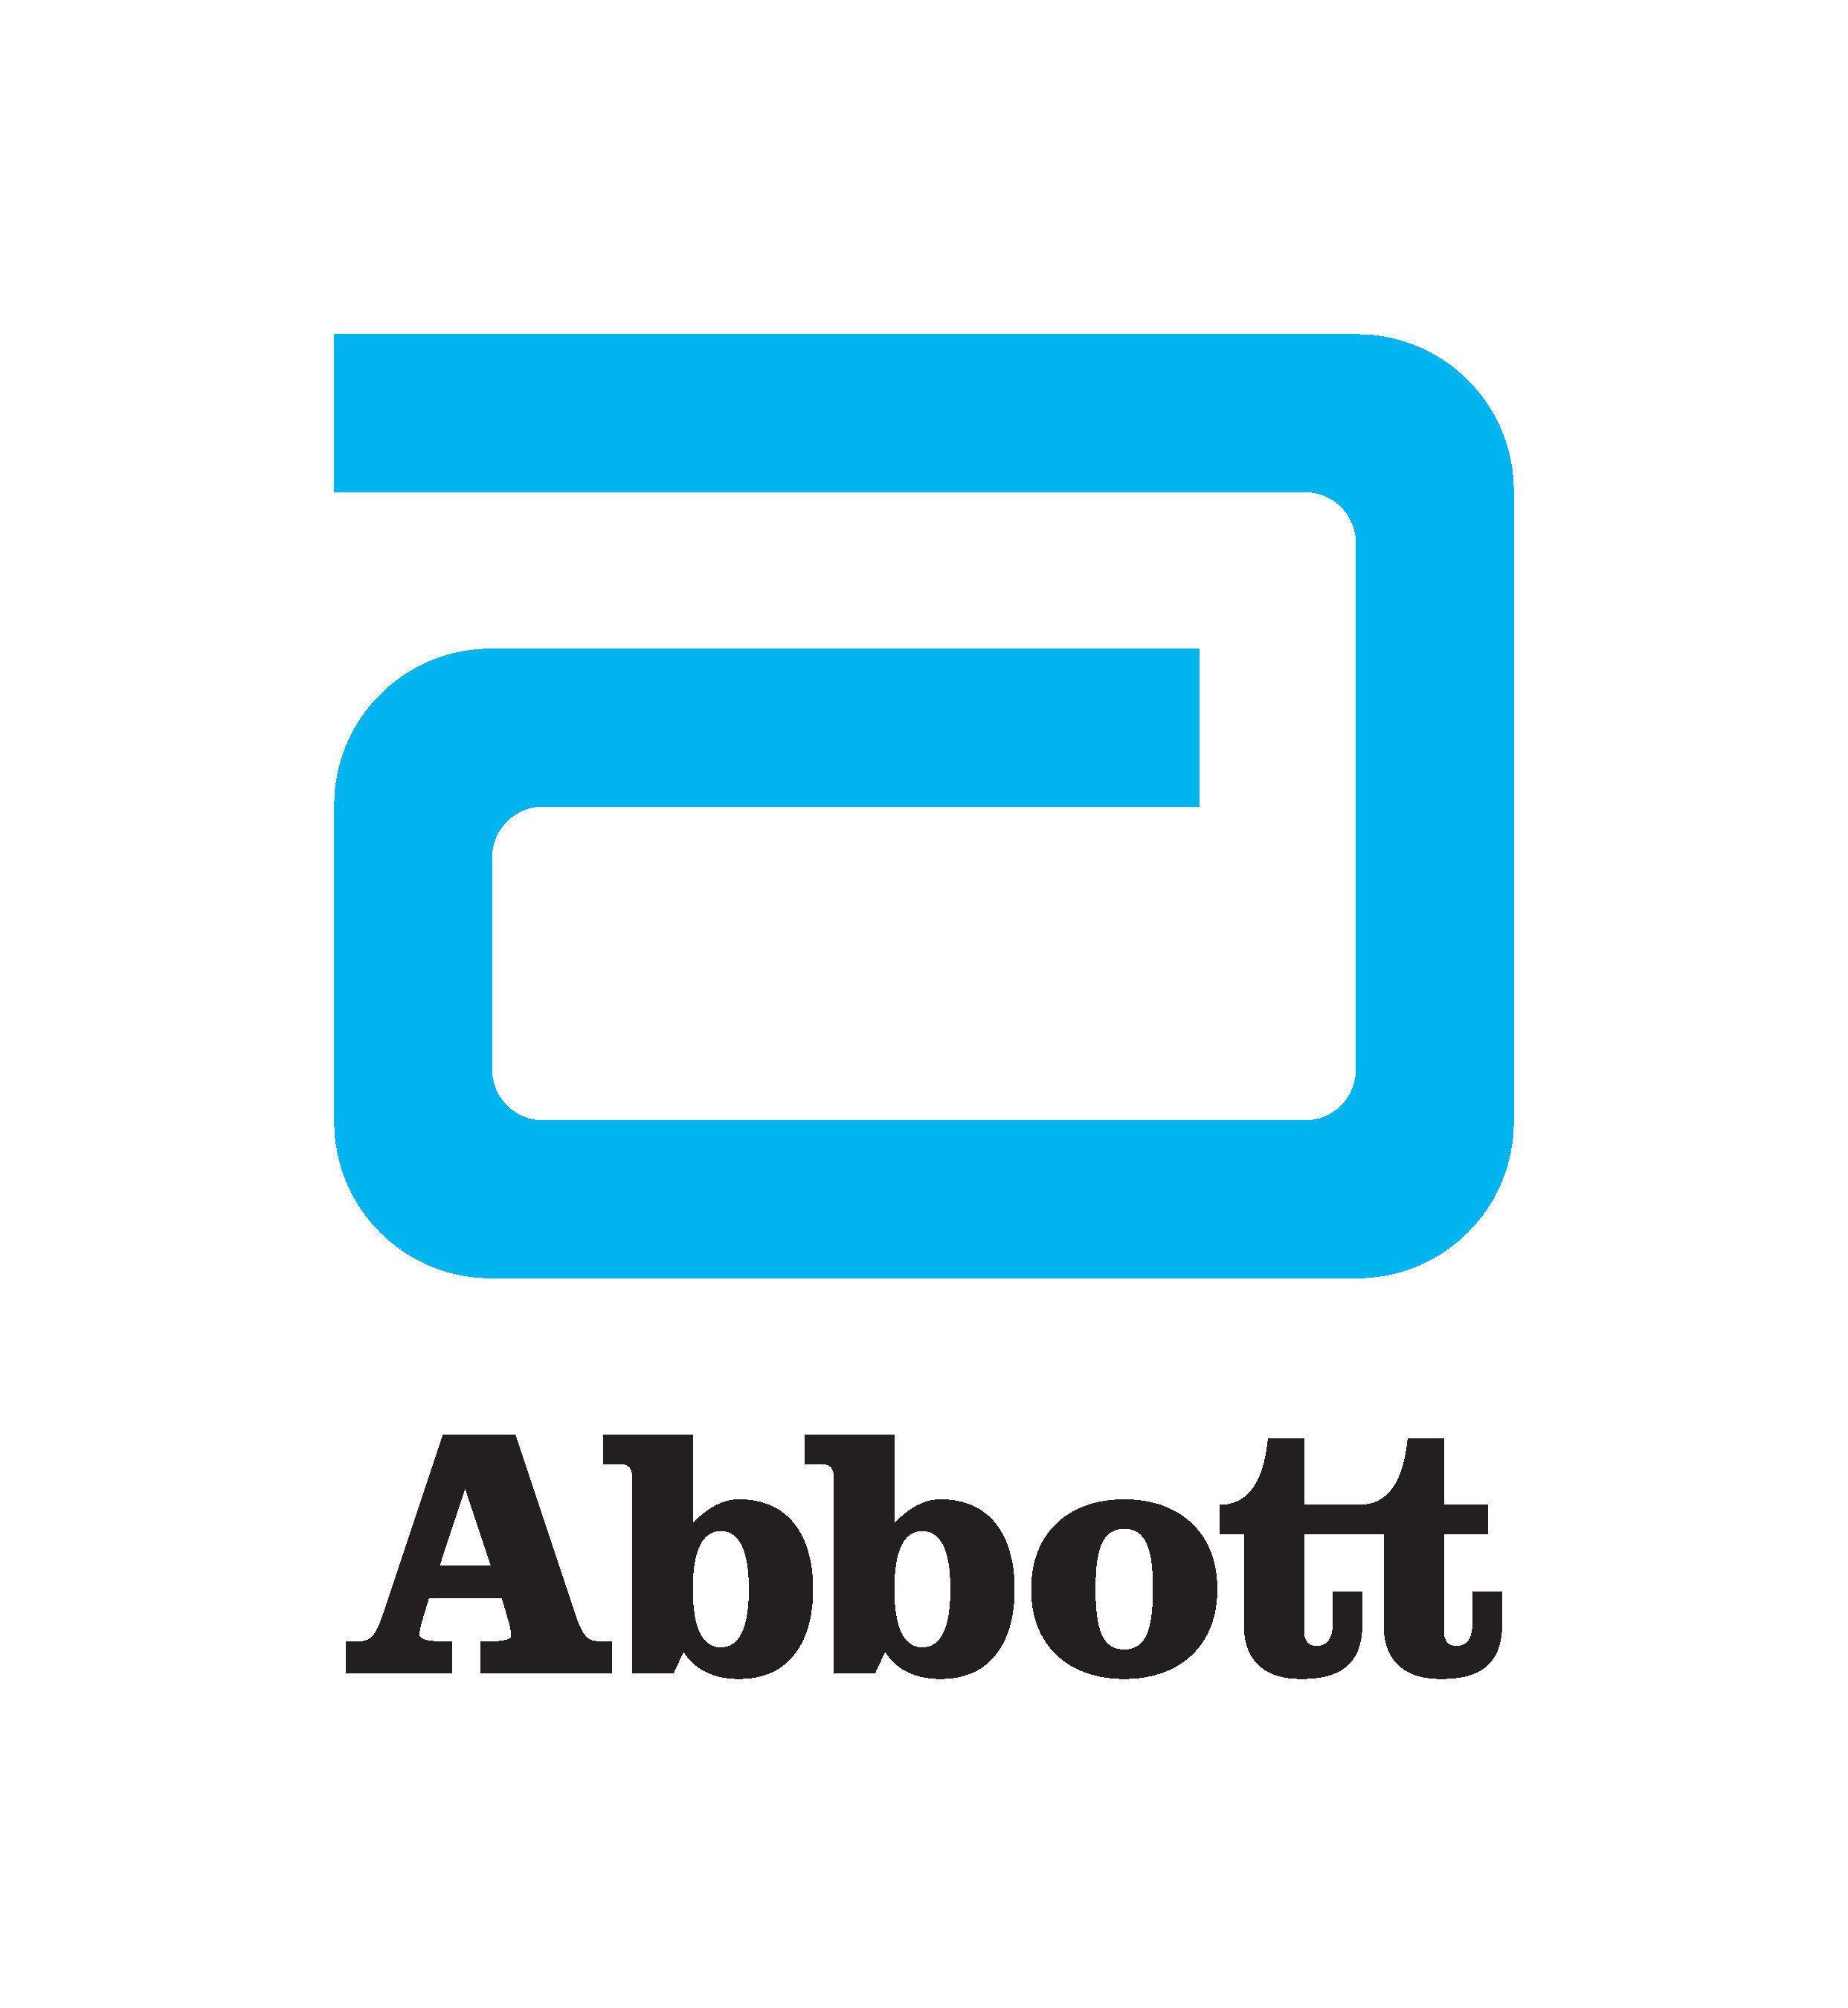 Alere Logo - Abbott Seeks to Terminate Alere Acquisition